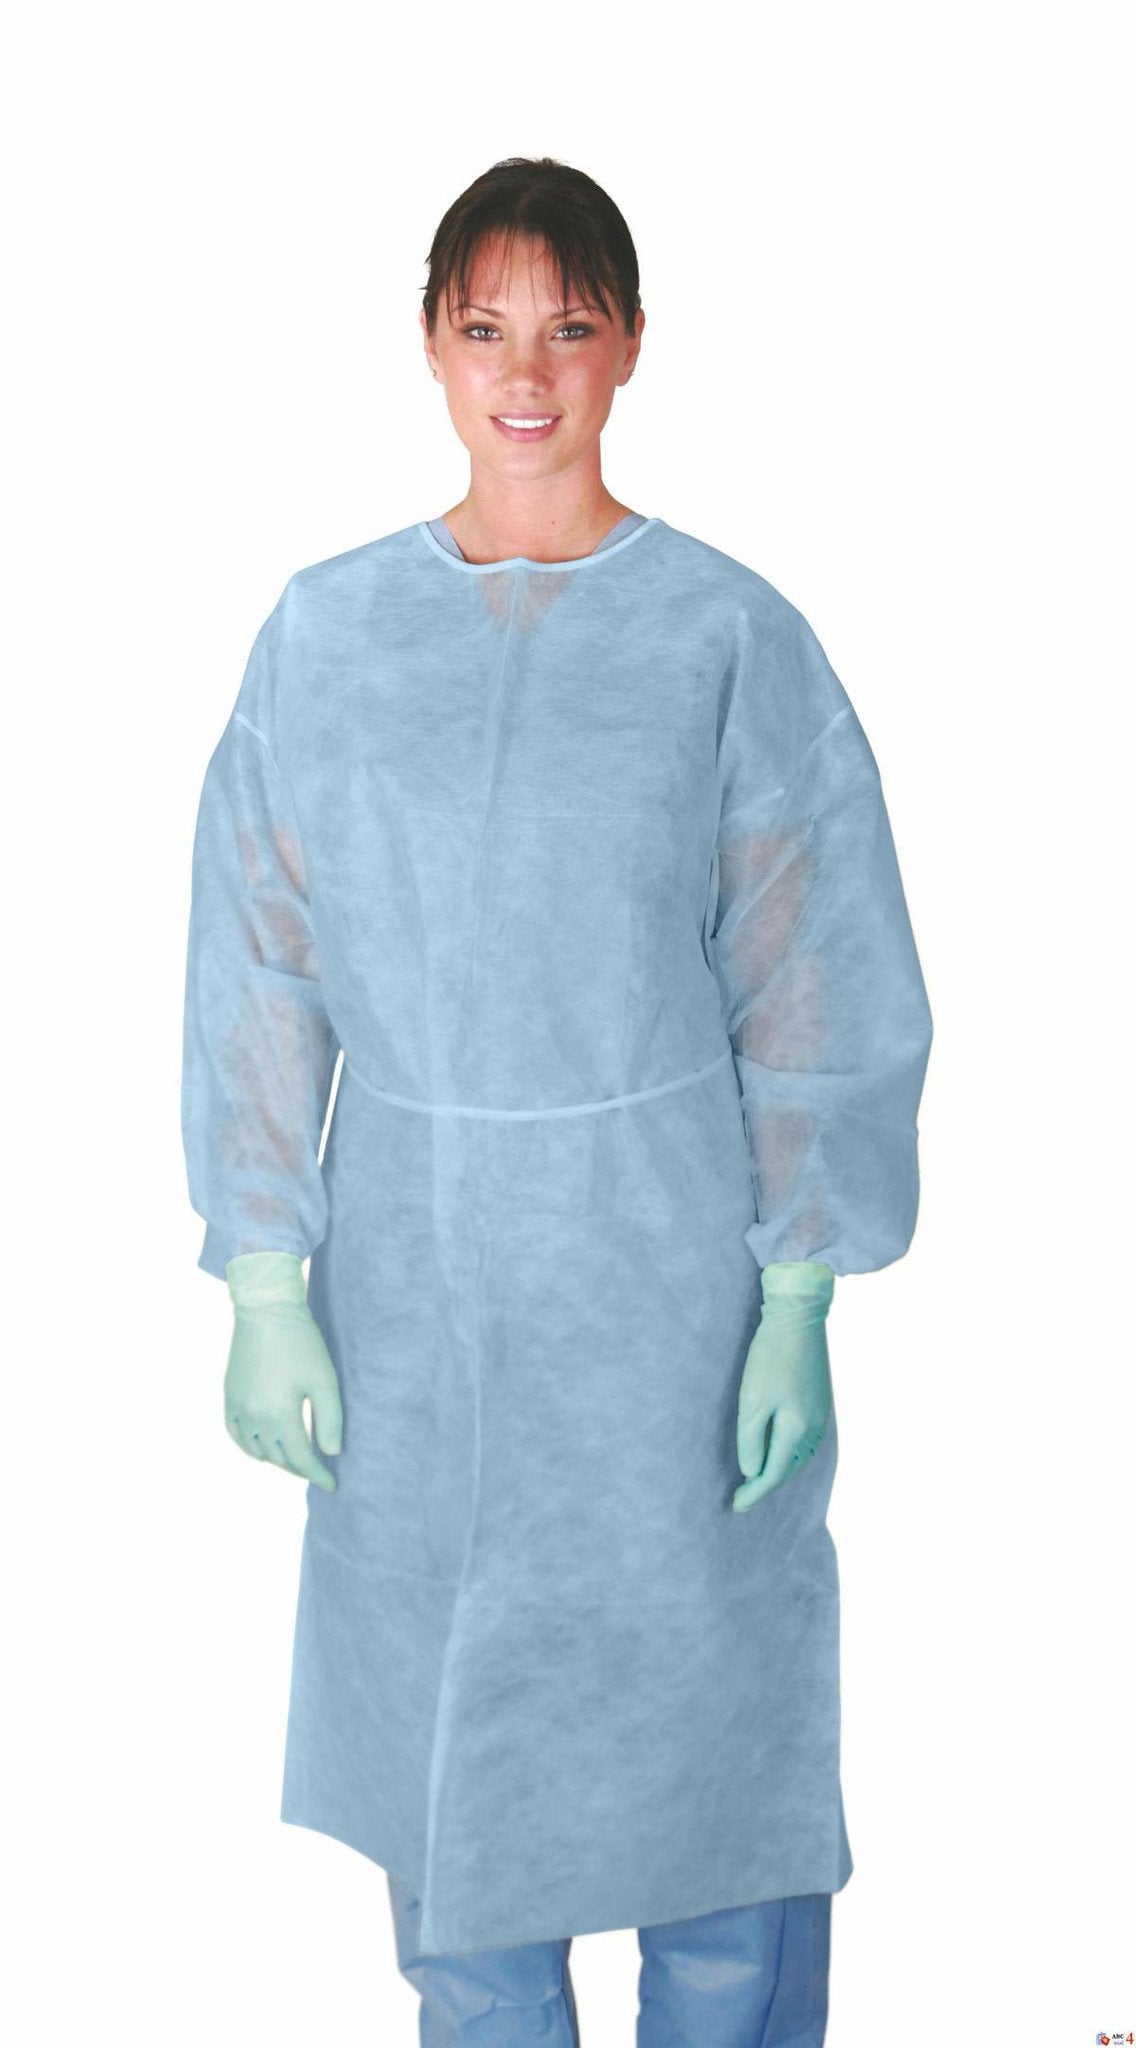 MIP Reusable Isolation Gown Hospital Scrub Price in India - Buy MIP Reusable  Isolation Gown Hospital Scrub online at Flipkart.com